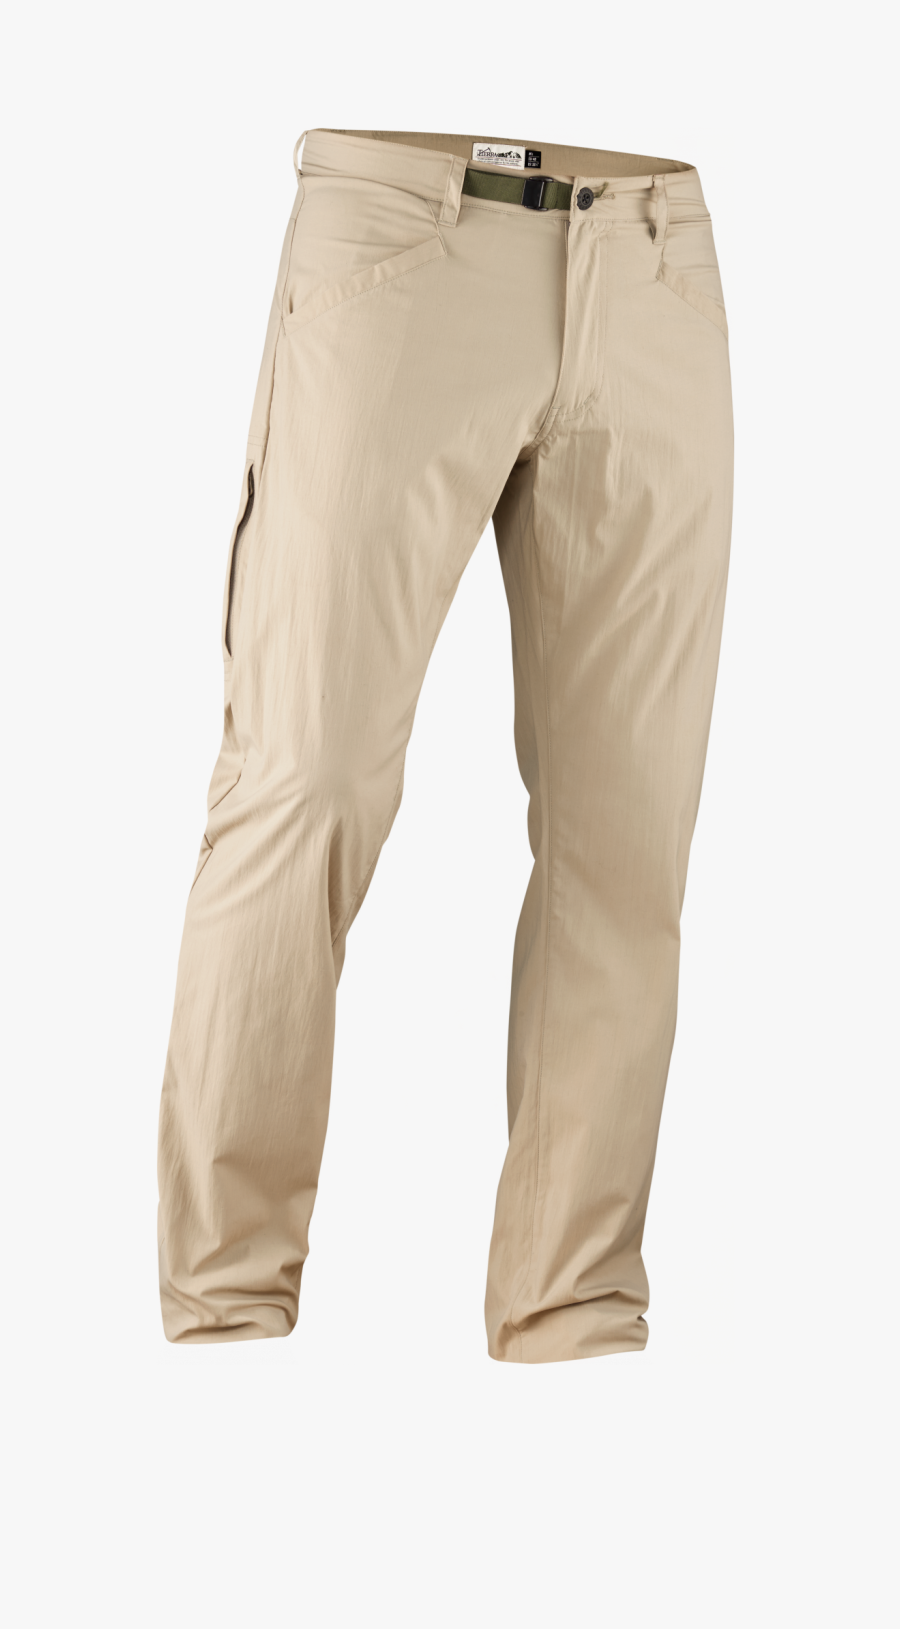 Cargo Pants Khaki Pocket - Khaki Pants Png, Transparent Clipart